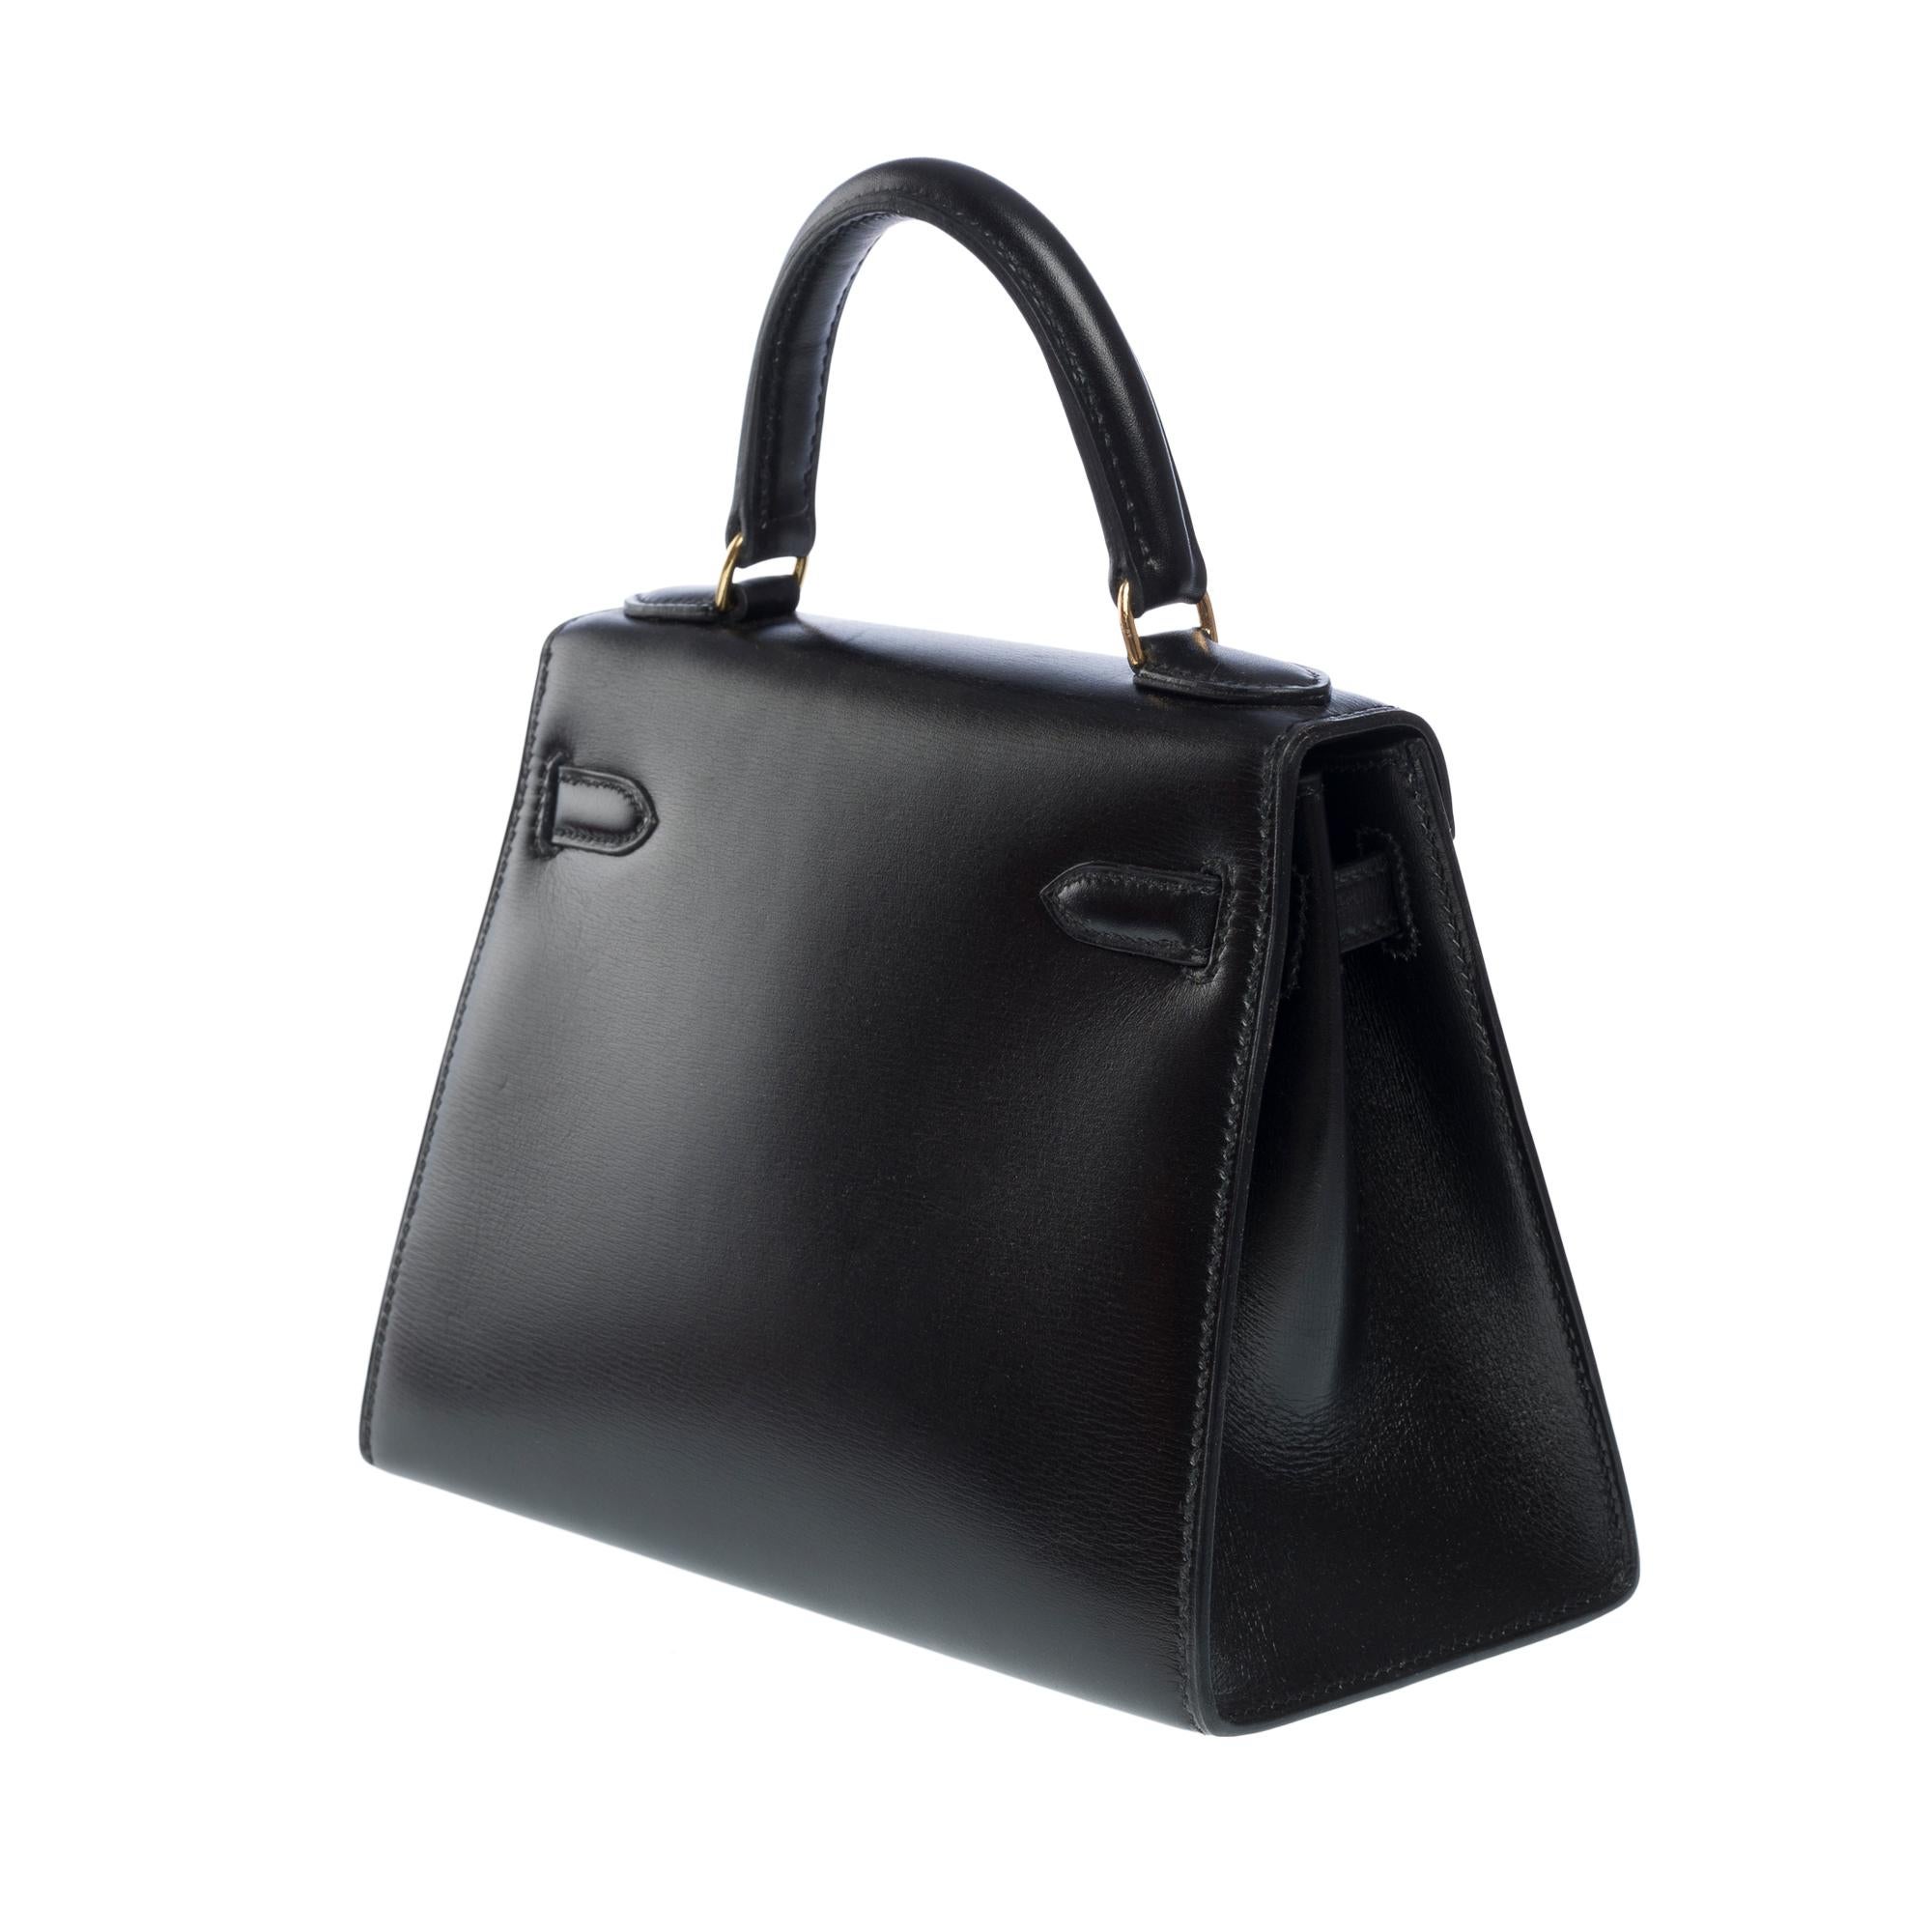 Rare Hermès Mini Kelly 20cm handbag double strap in black box calfskin, GHW 1